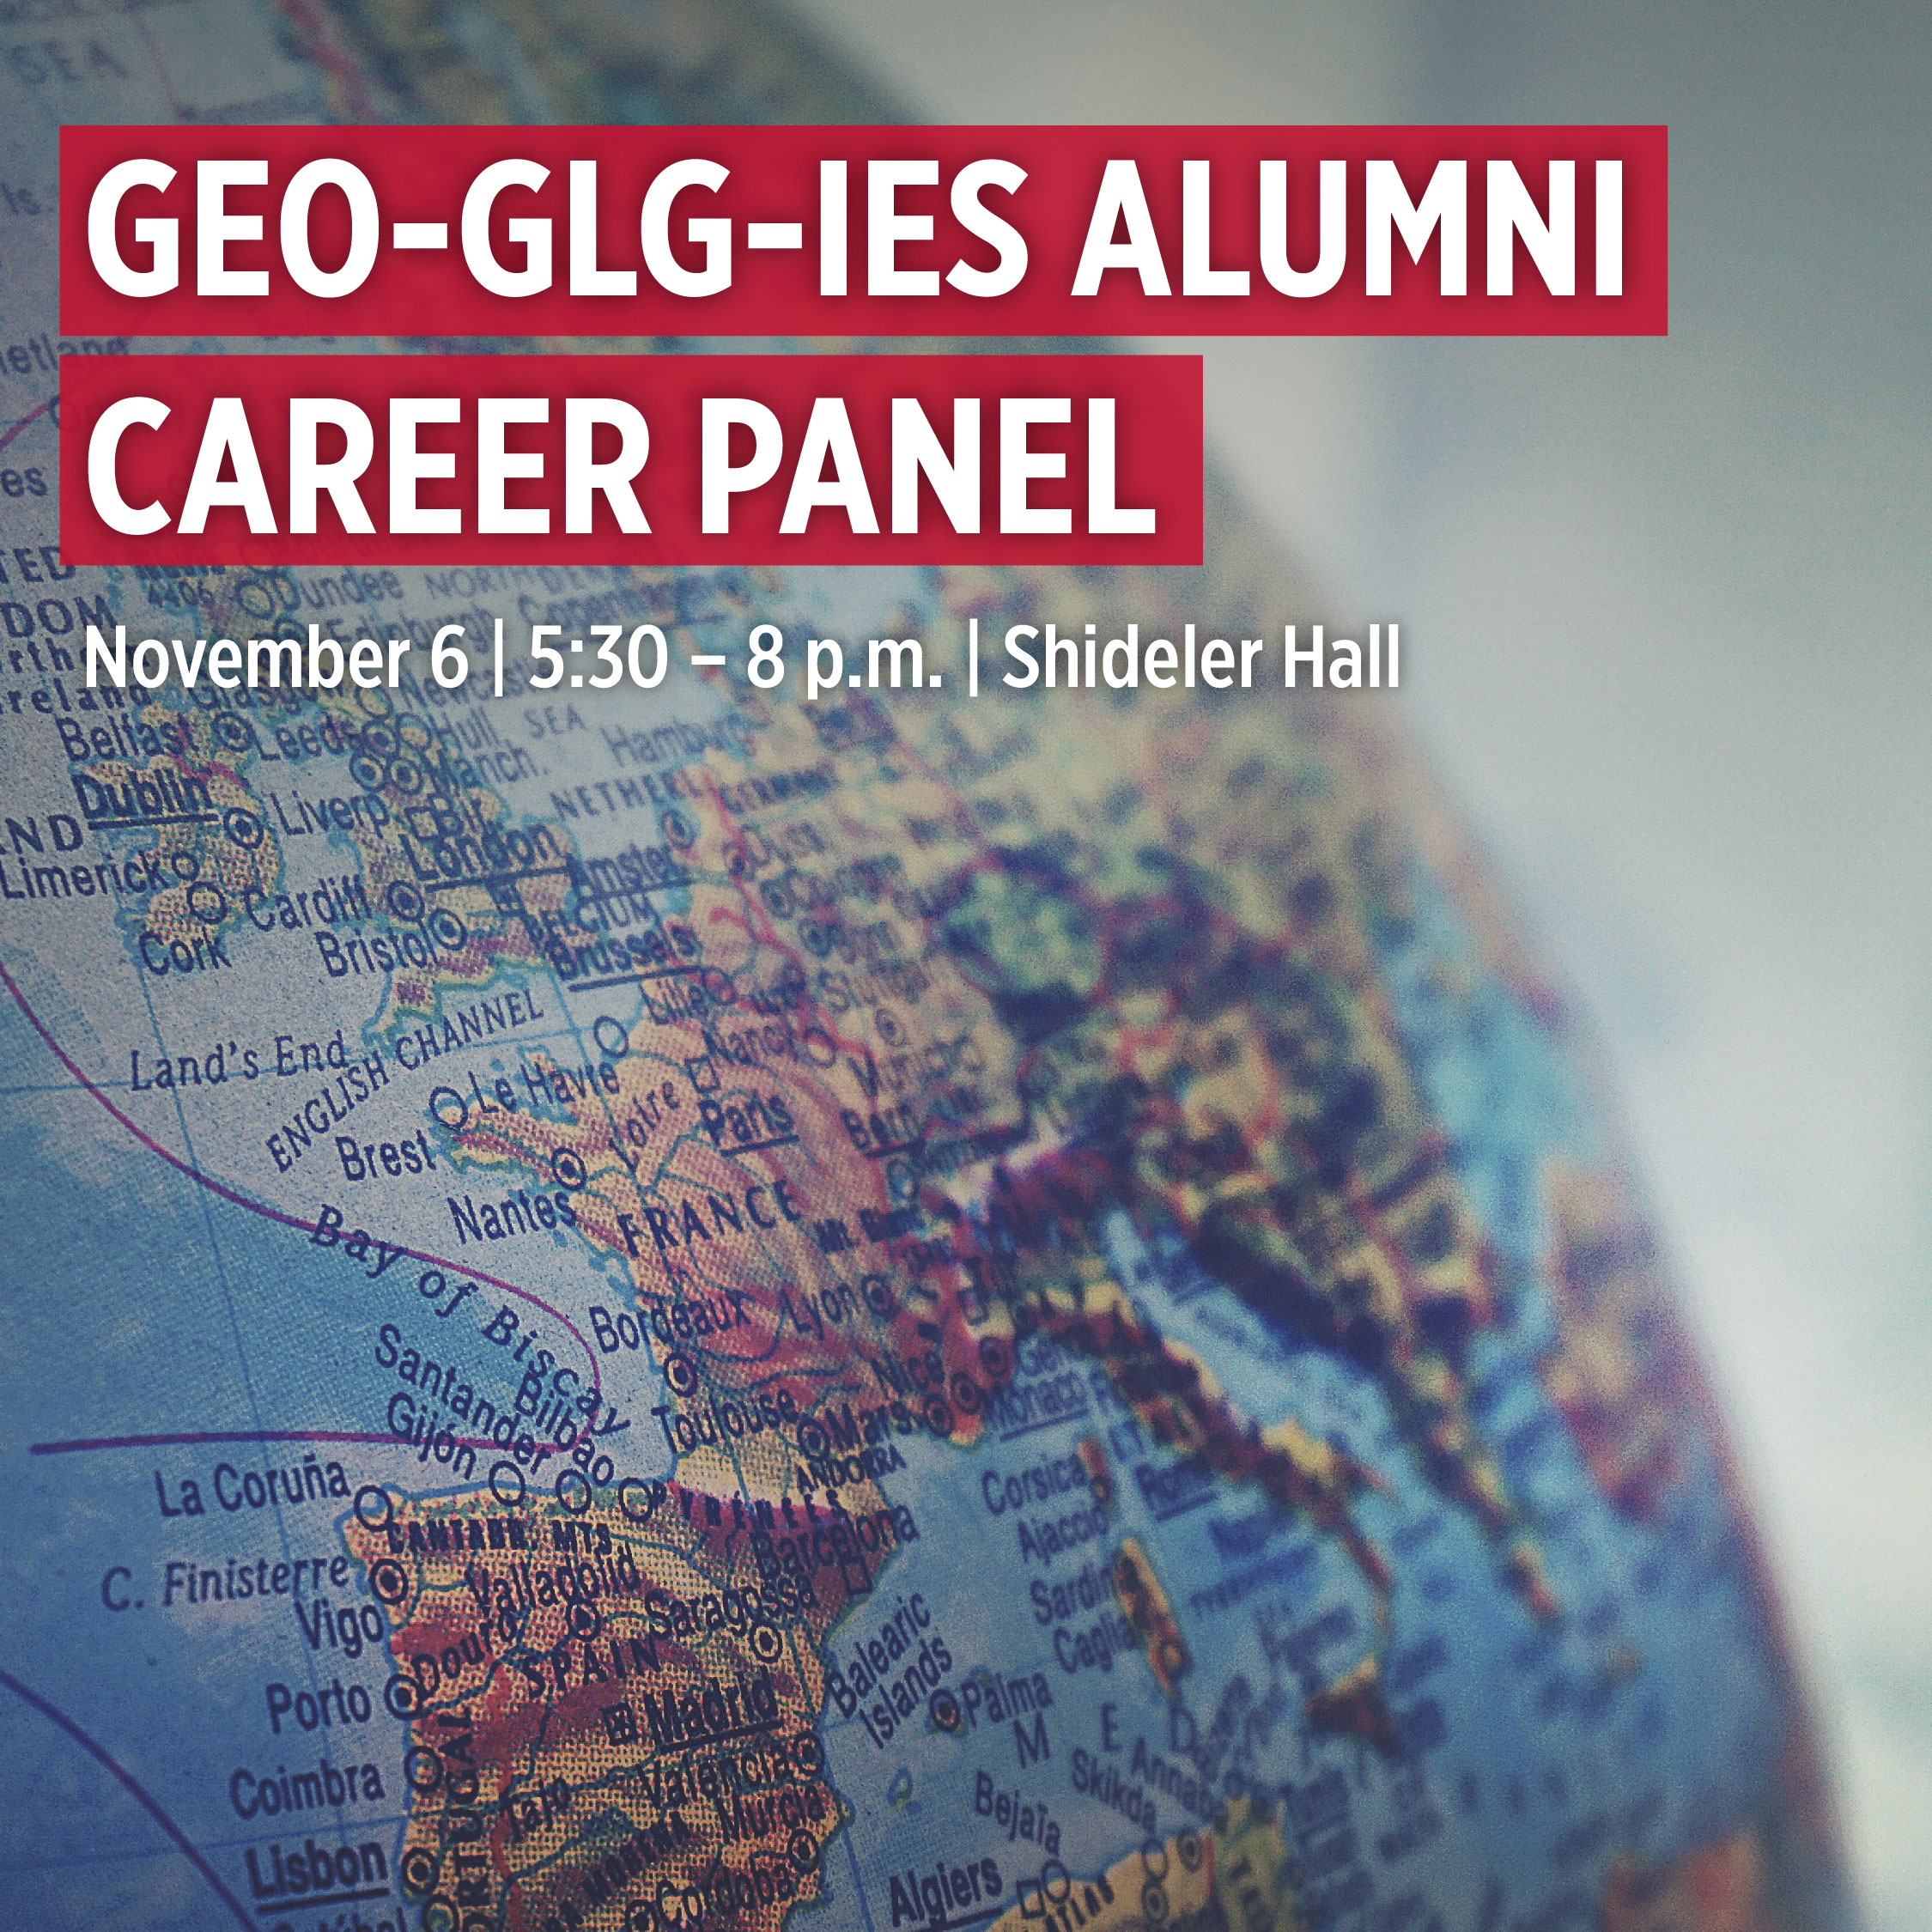 GEO-GLG-IES Alumni Panel on November 6 from 5:30 – 8 p.m. at Shideler Hall